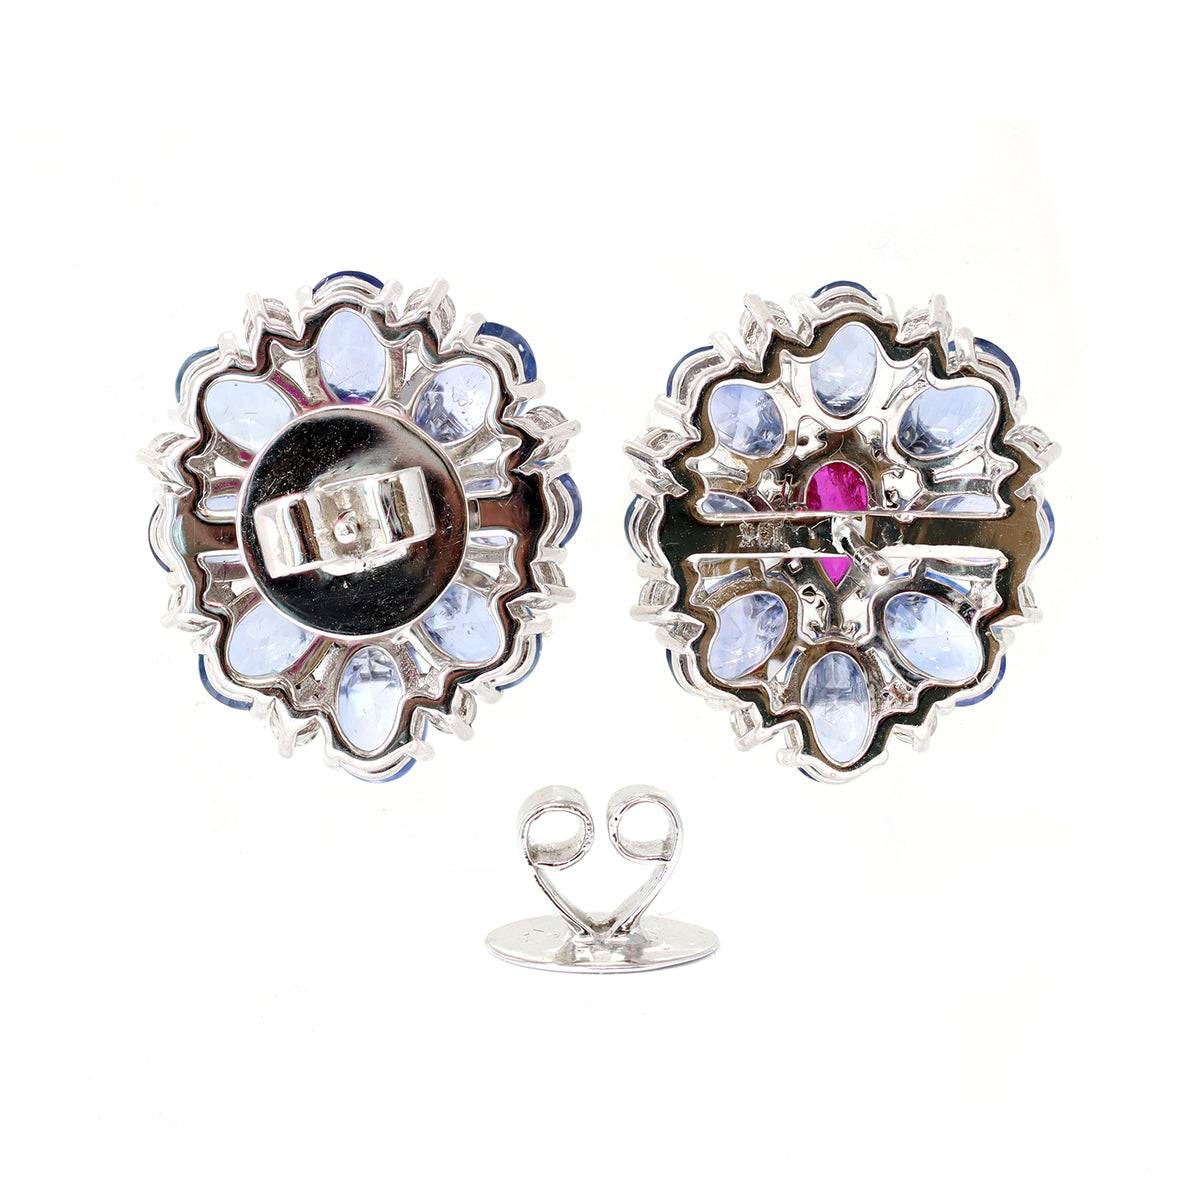 sapphire-diamond-and-ruby-earrings-set-in-18-karat-white-gold-back-view-2000x2000.jpg